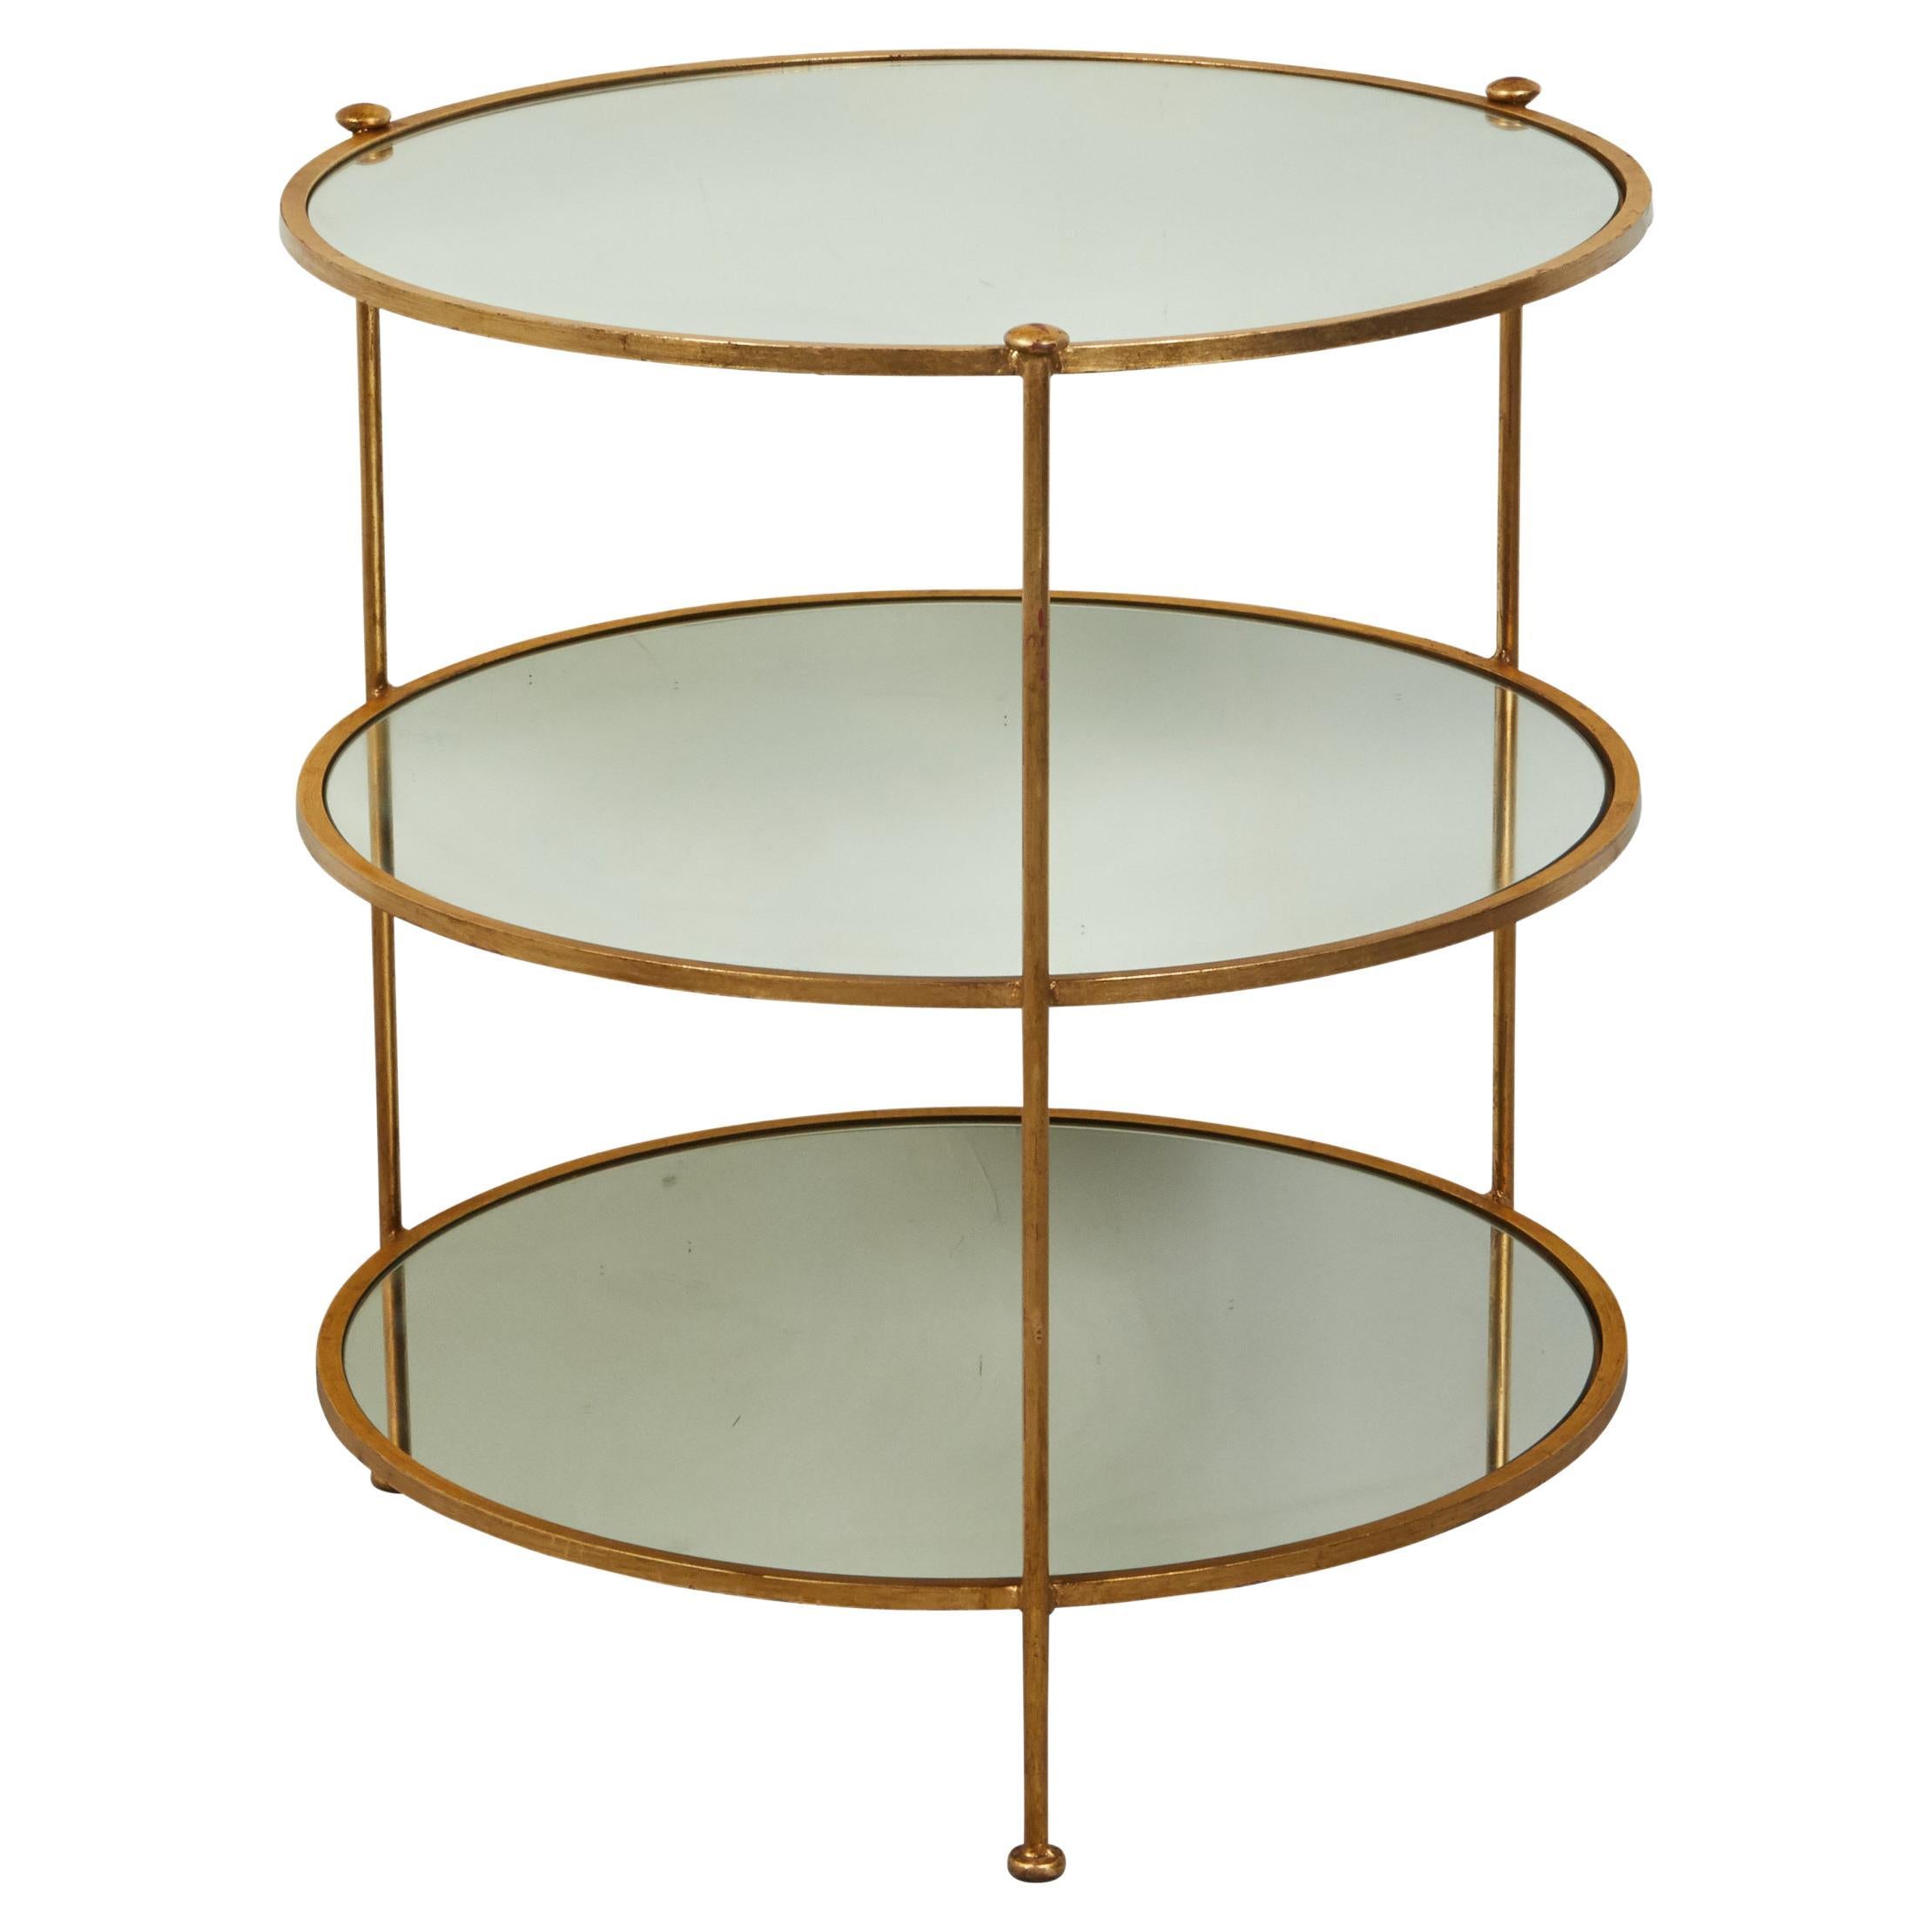 Italian Midcentury Gilt Iron Three-Tier Side Table with Round Mirrored Shelves